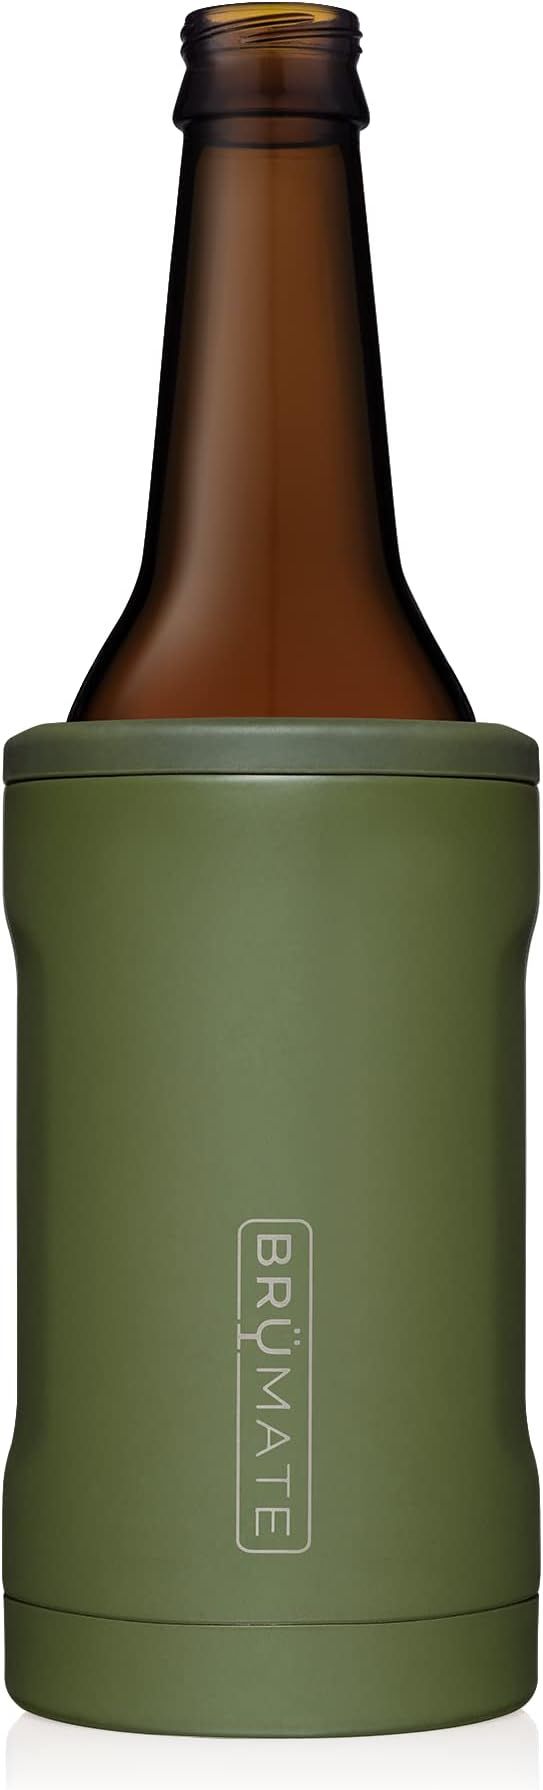 BrüMate Hopsulator BOTT'L - Insulated Beer Bottle Cooler for 12 Oz Bottles - Double-walled Stain... | Amazon (US)